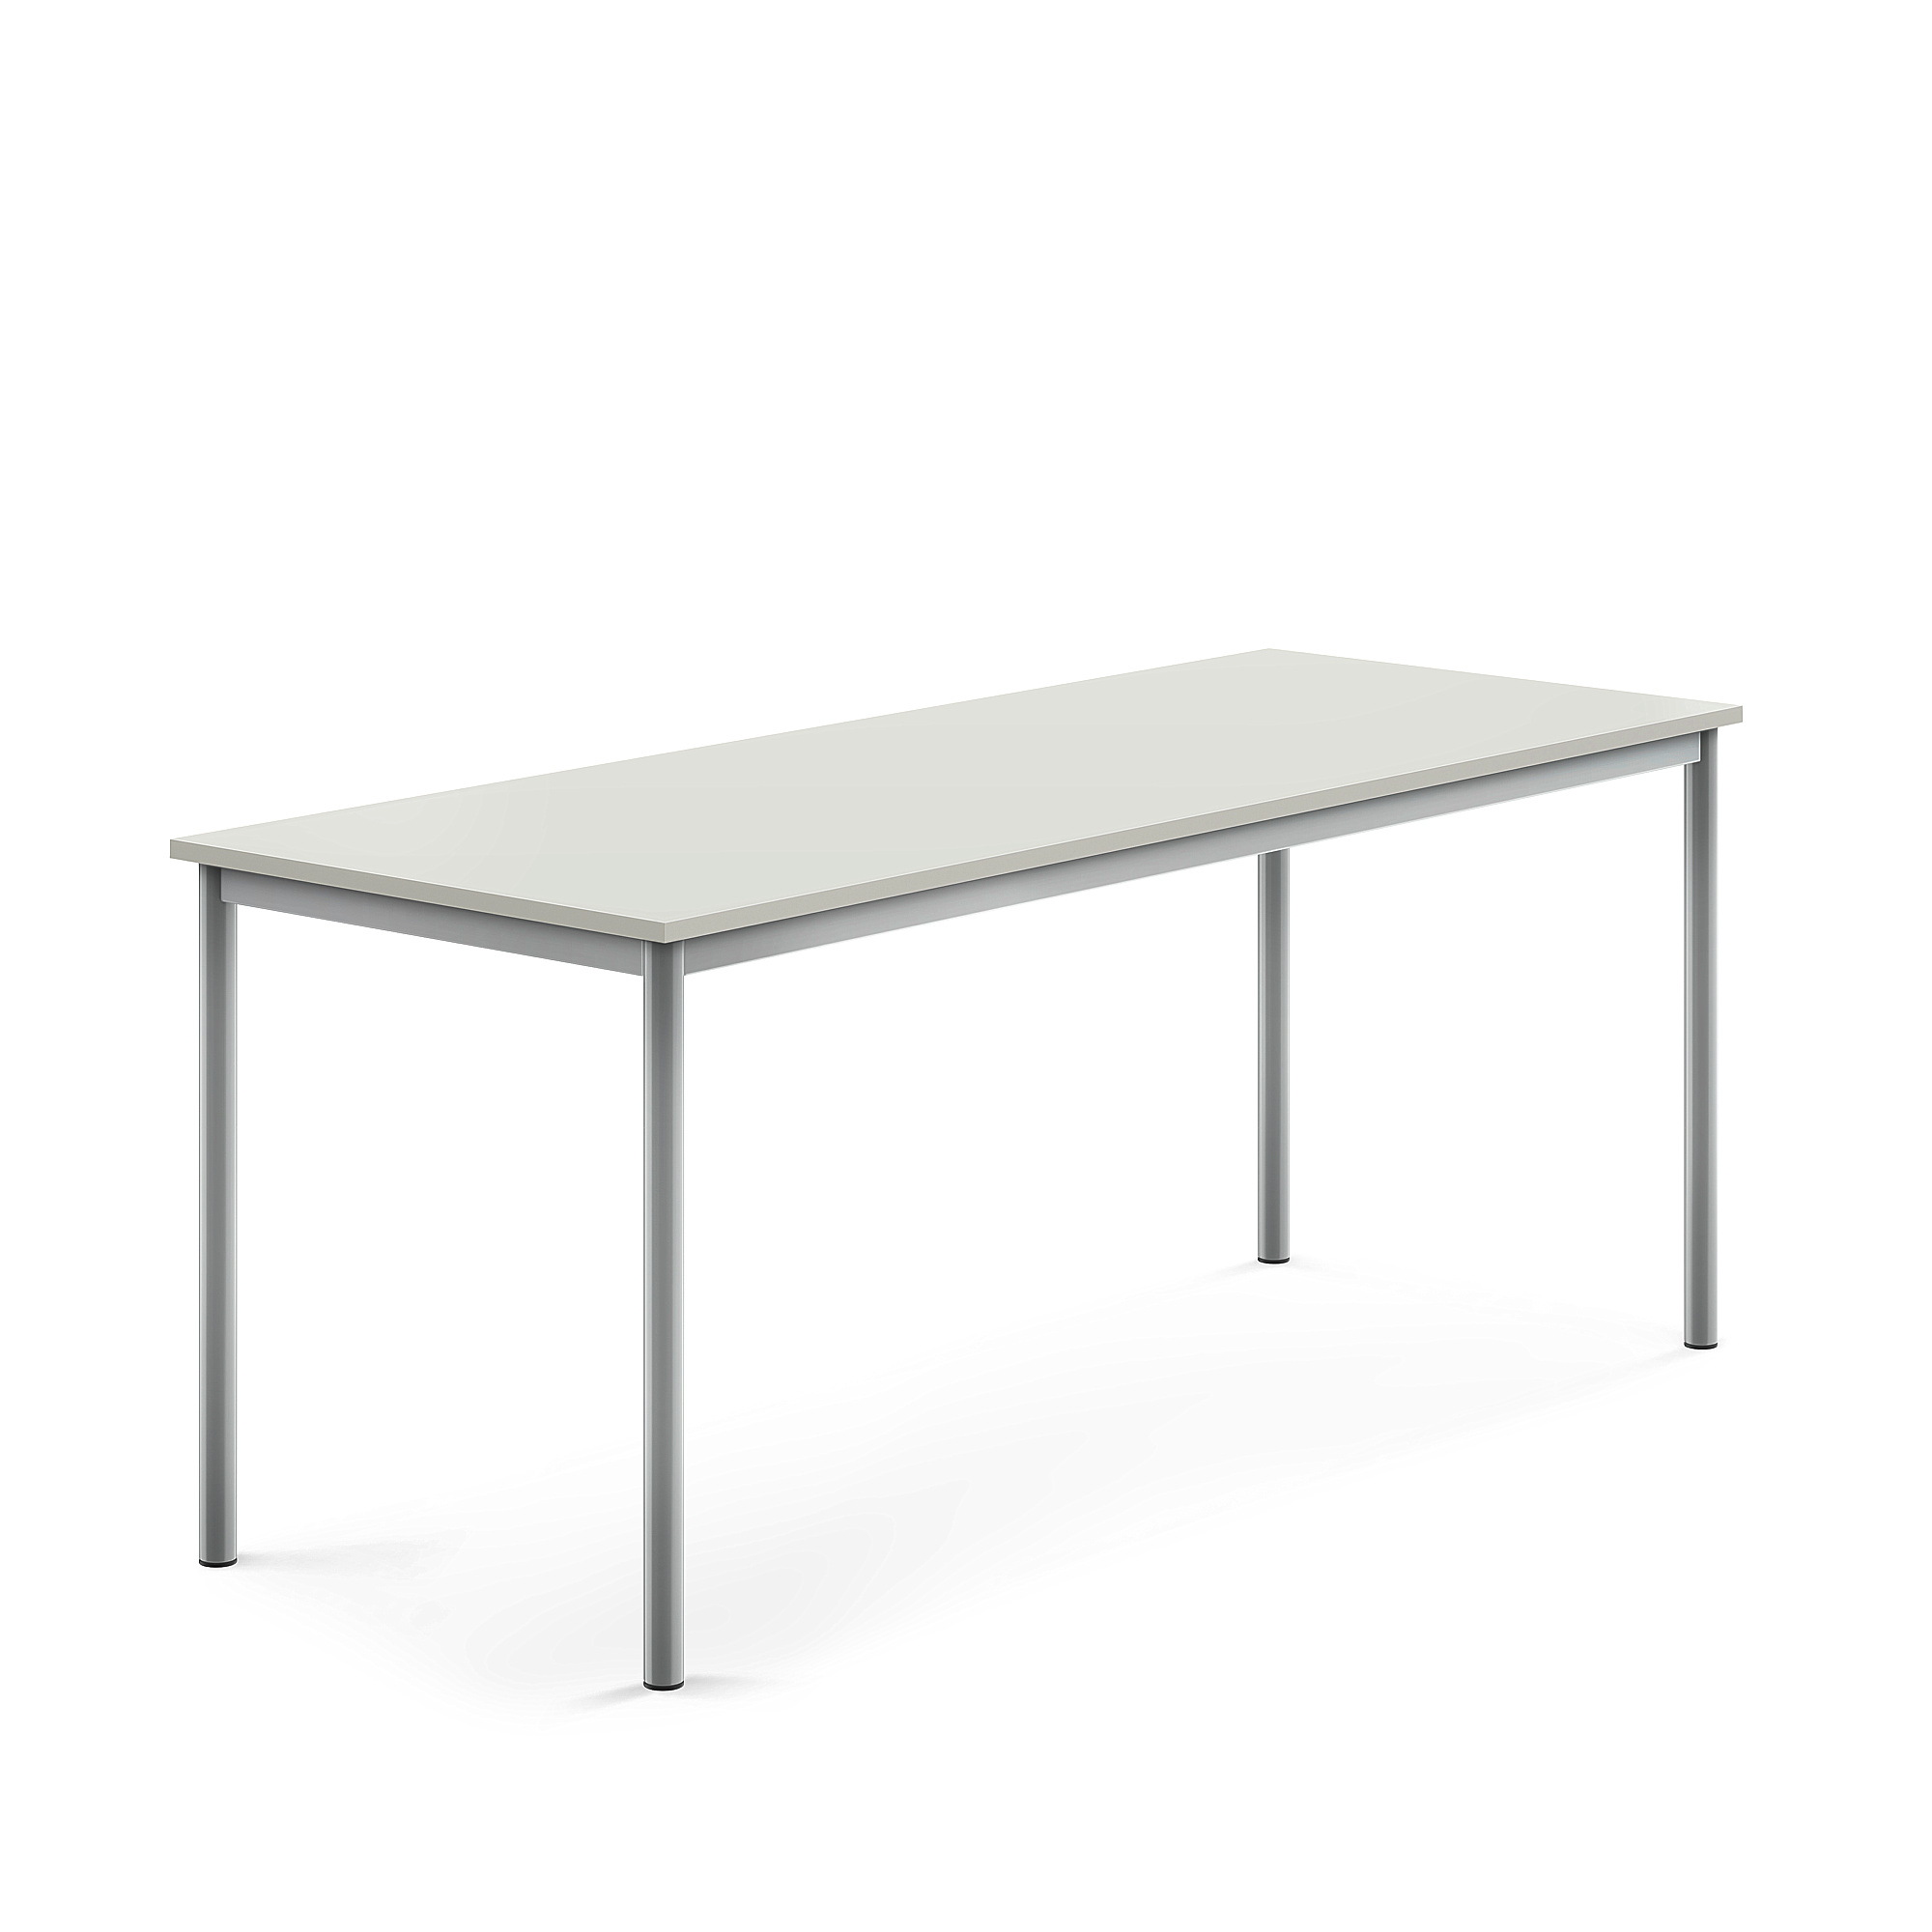 Stůl BORÅS, 1800x700x720 mm, stříbrné nohy, HPL deska, šedá